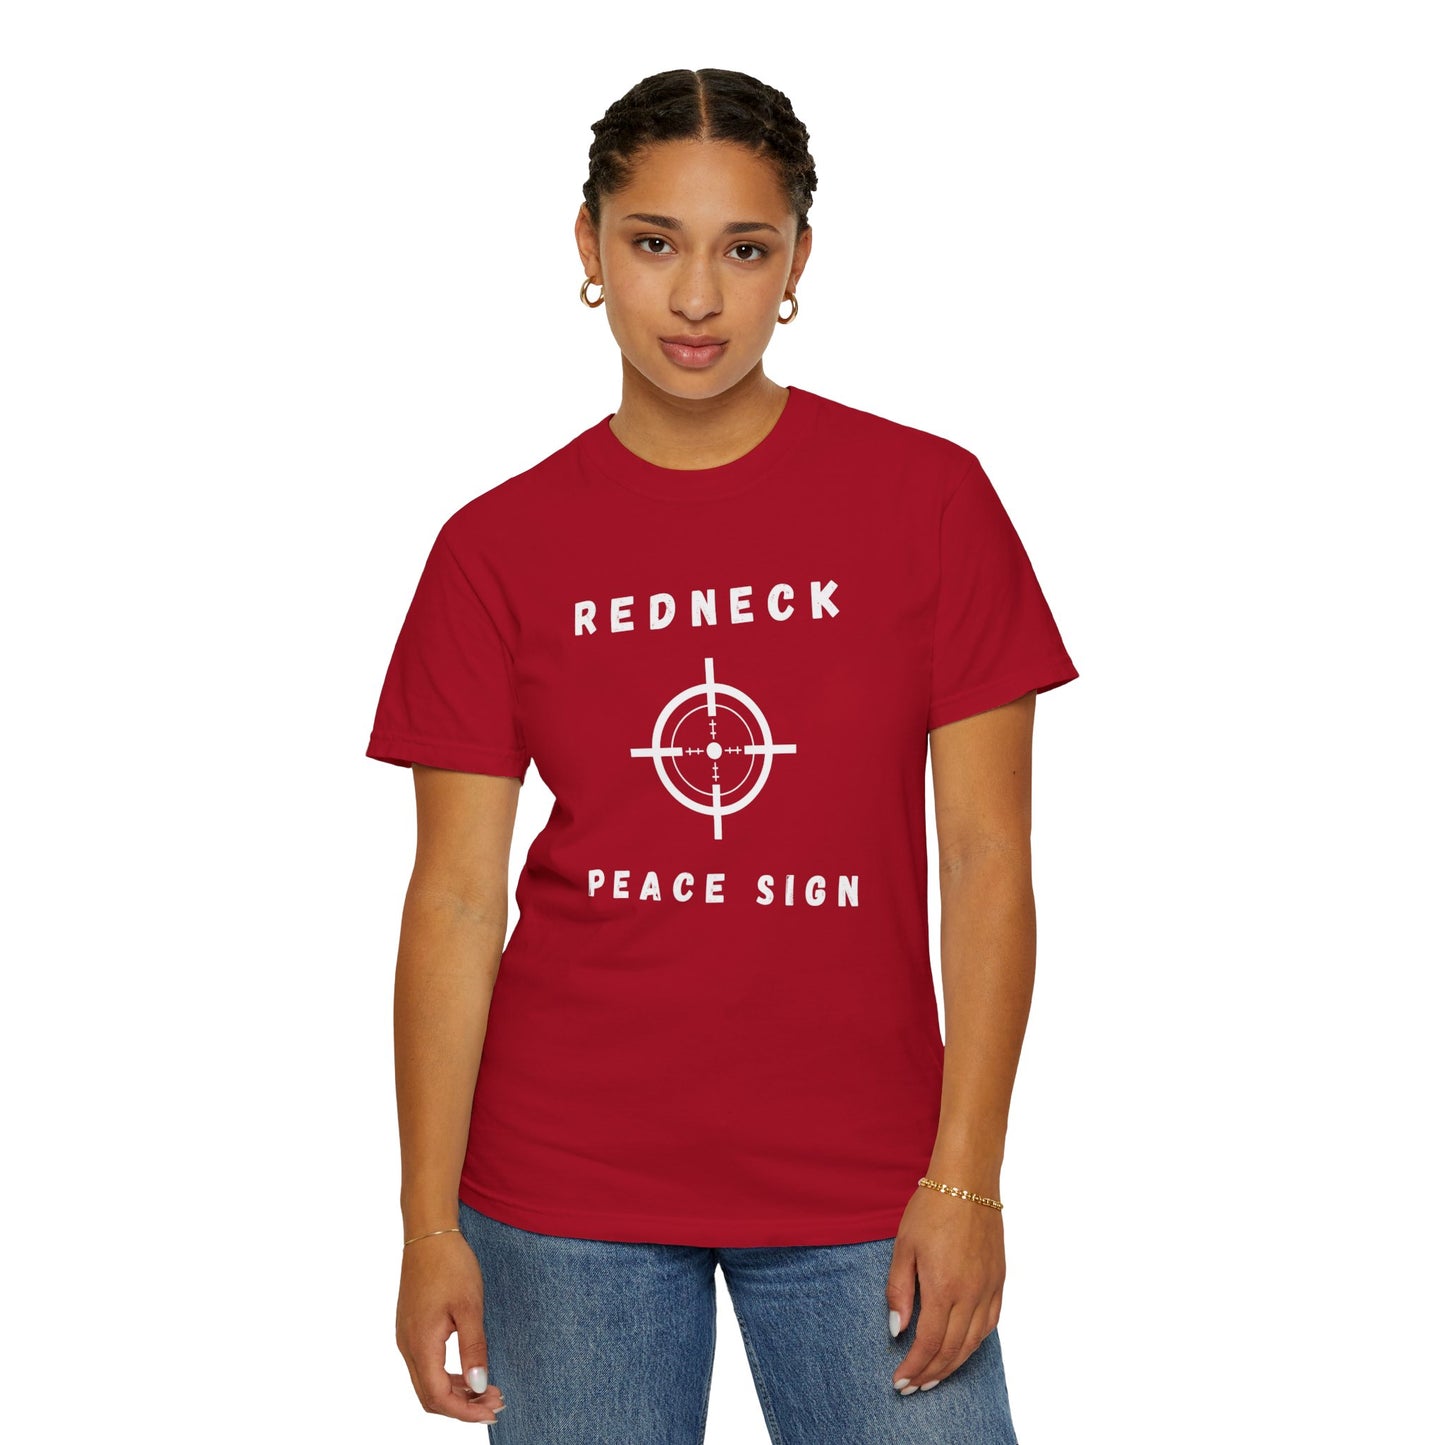 Redneck Peace Sign T-shirt